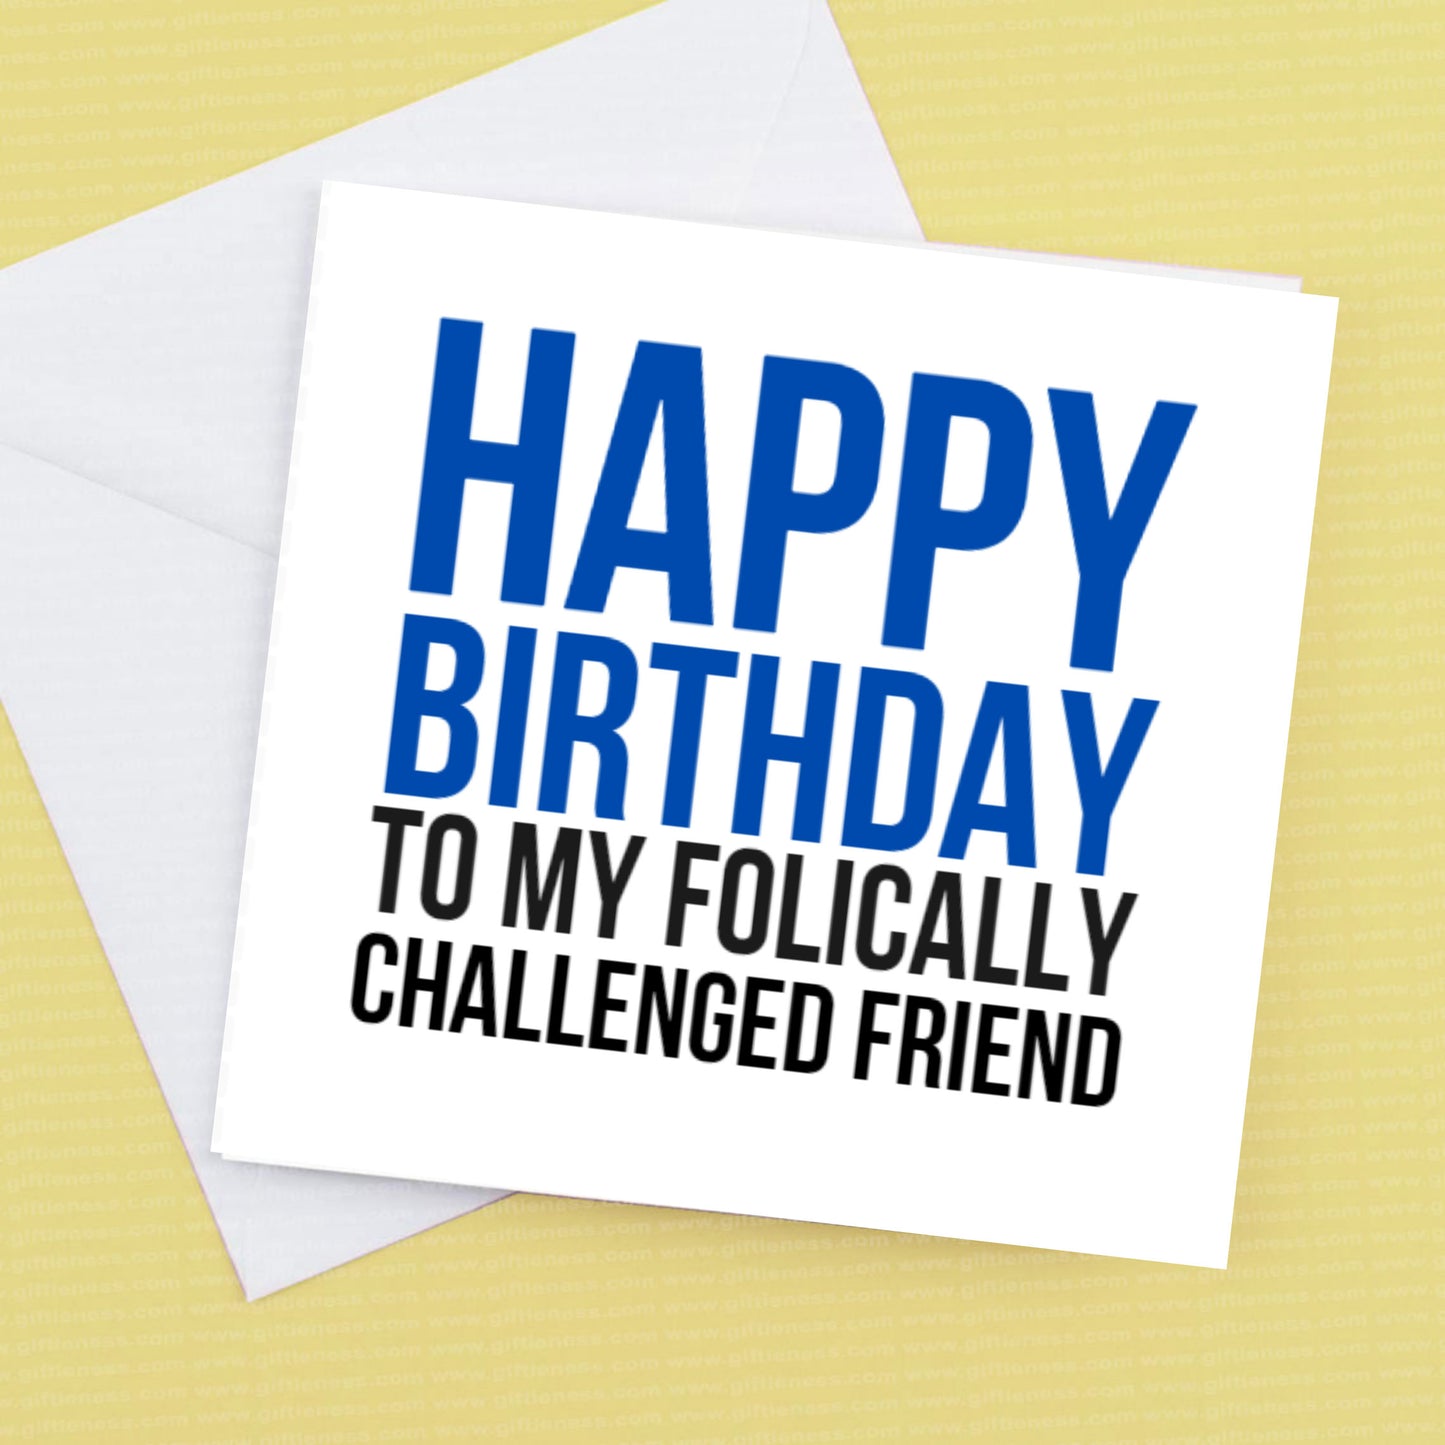 Happy Birthday to my Folically challenged friend